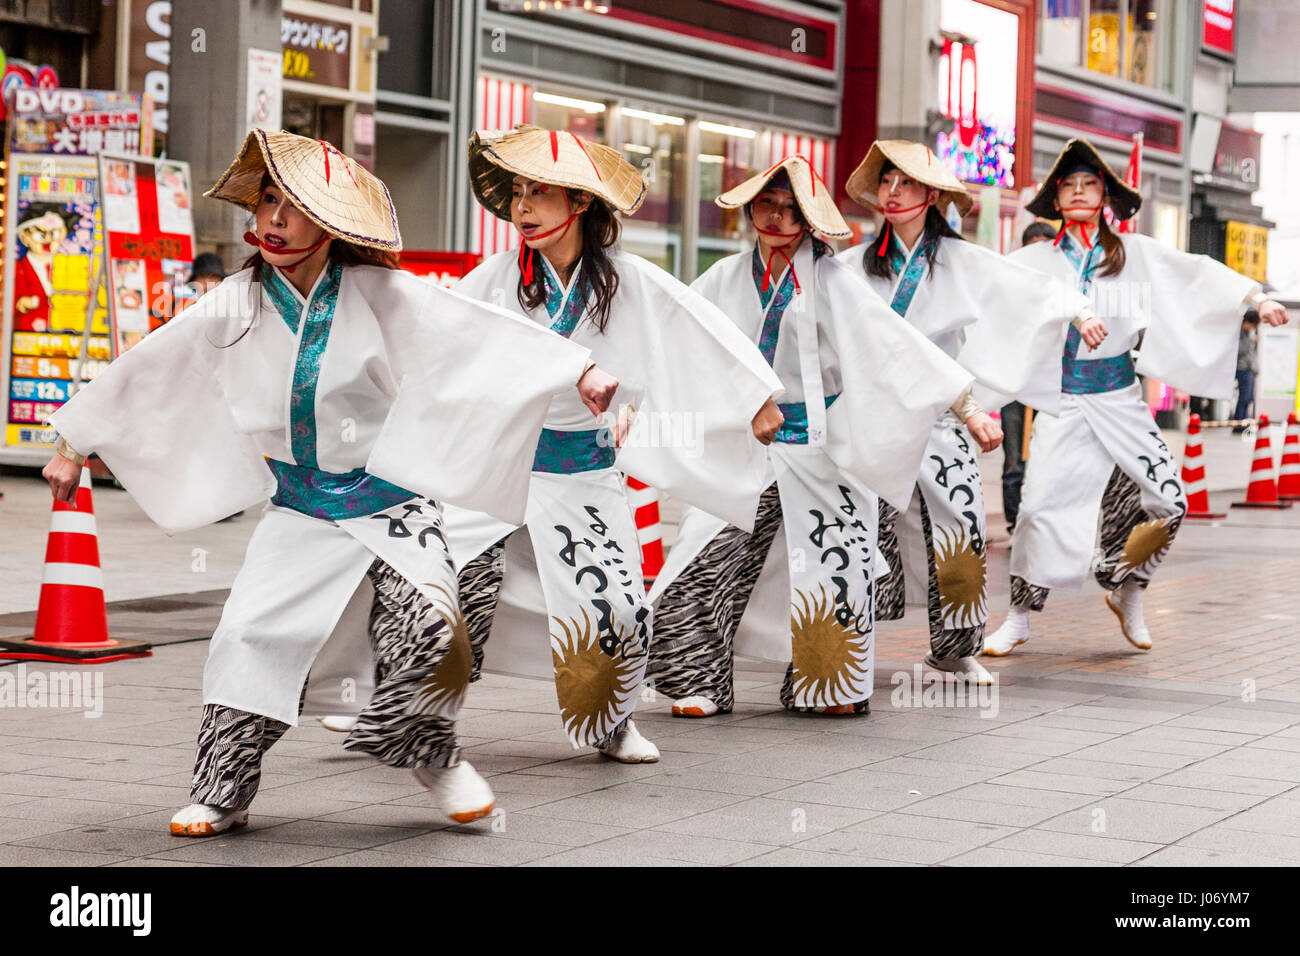 Hinokuni Yosakoi dance festival. Line of five women dancers in farmer costume, white yukata, with straw hats, dancing in shopping mall. Stock Photo